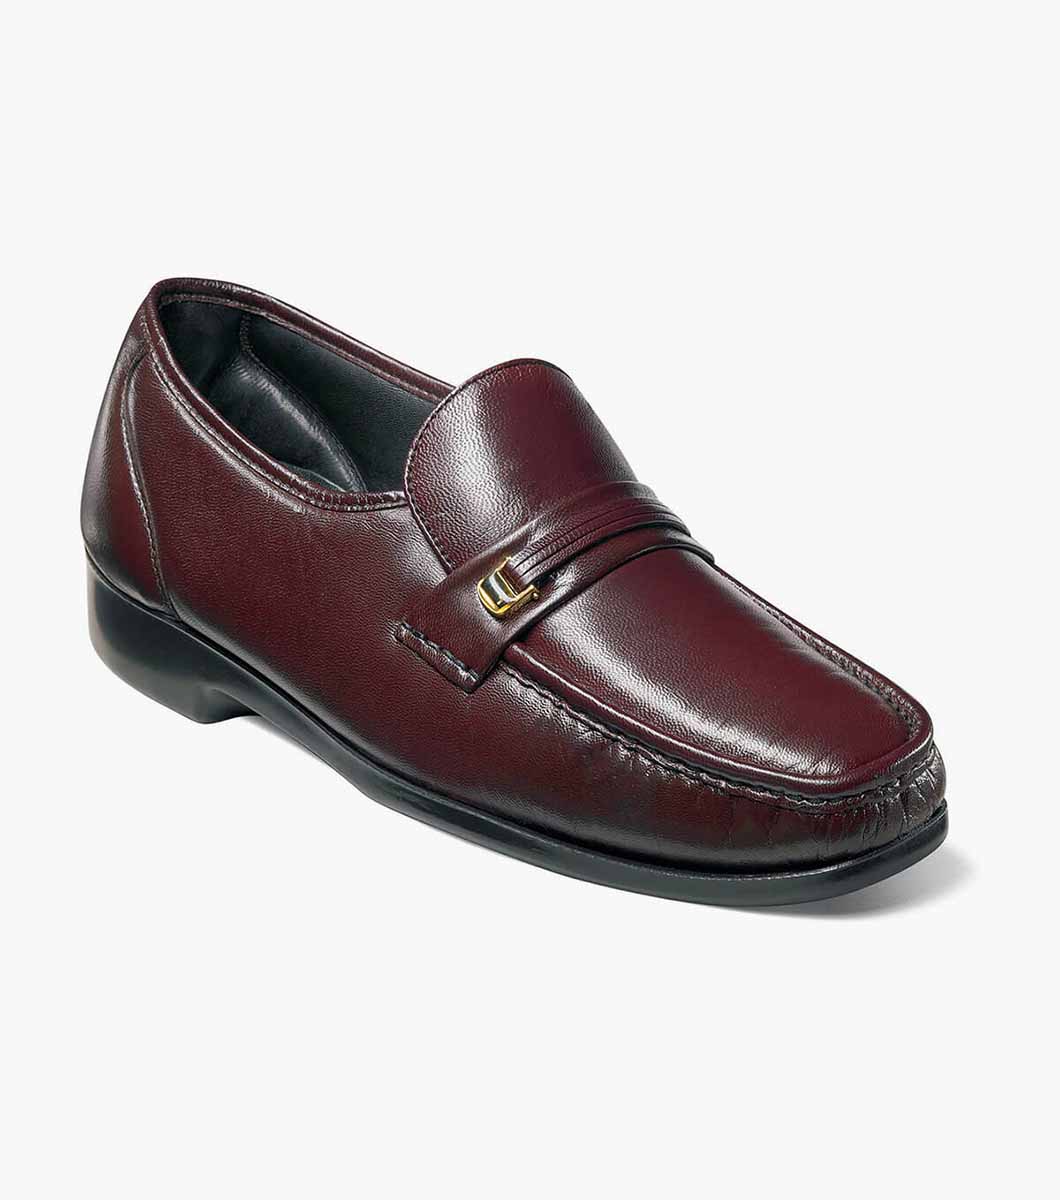 florsheim burgundy shoes